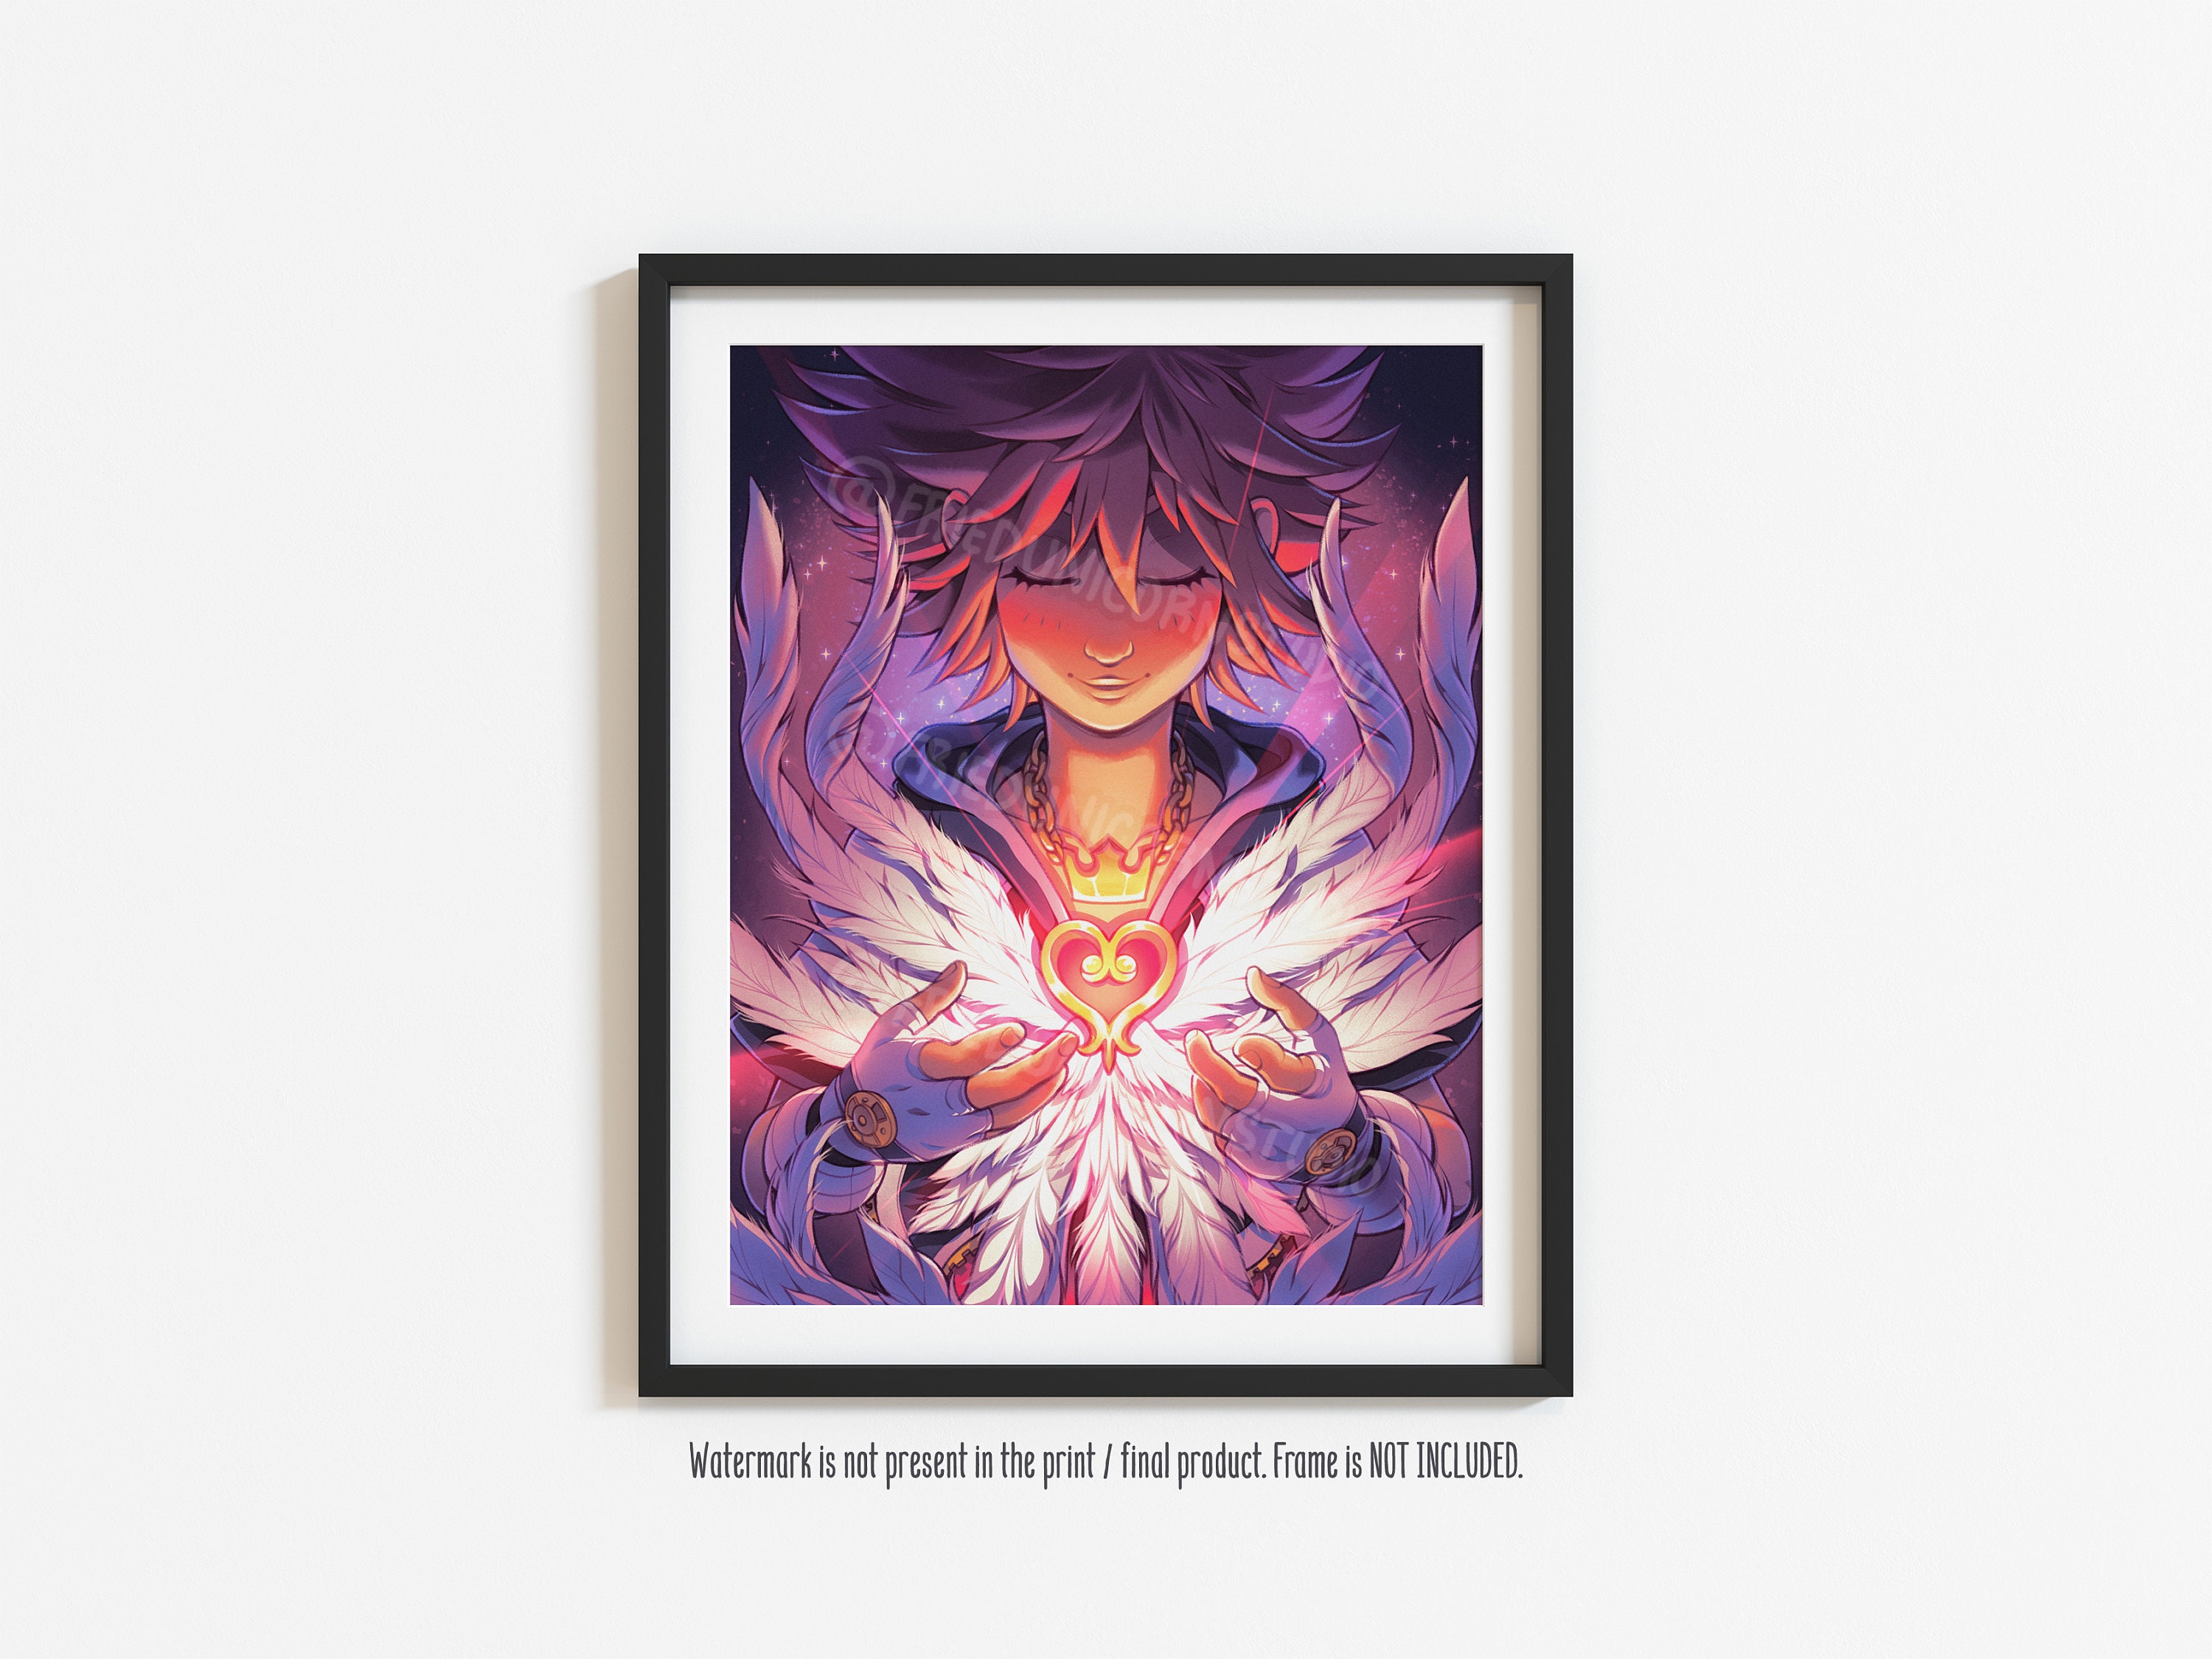 Kingdom hearts Sora Art Board Print for Sale by skydesigns